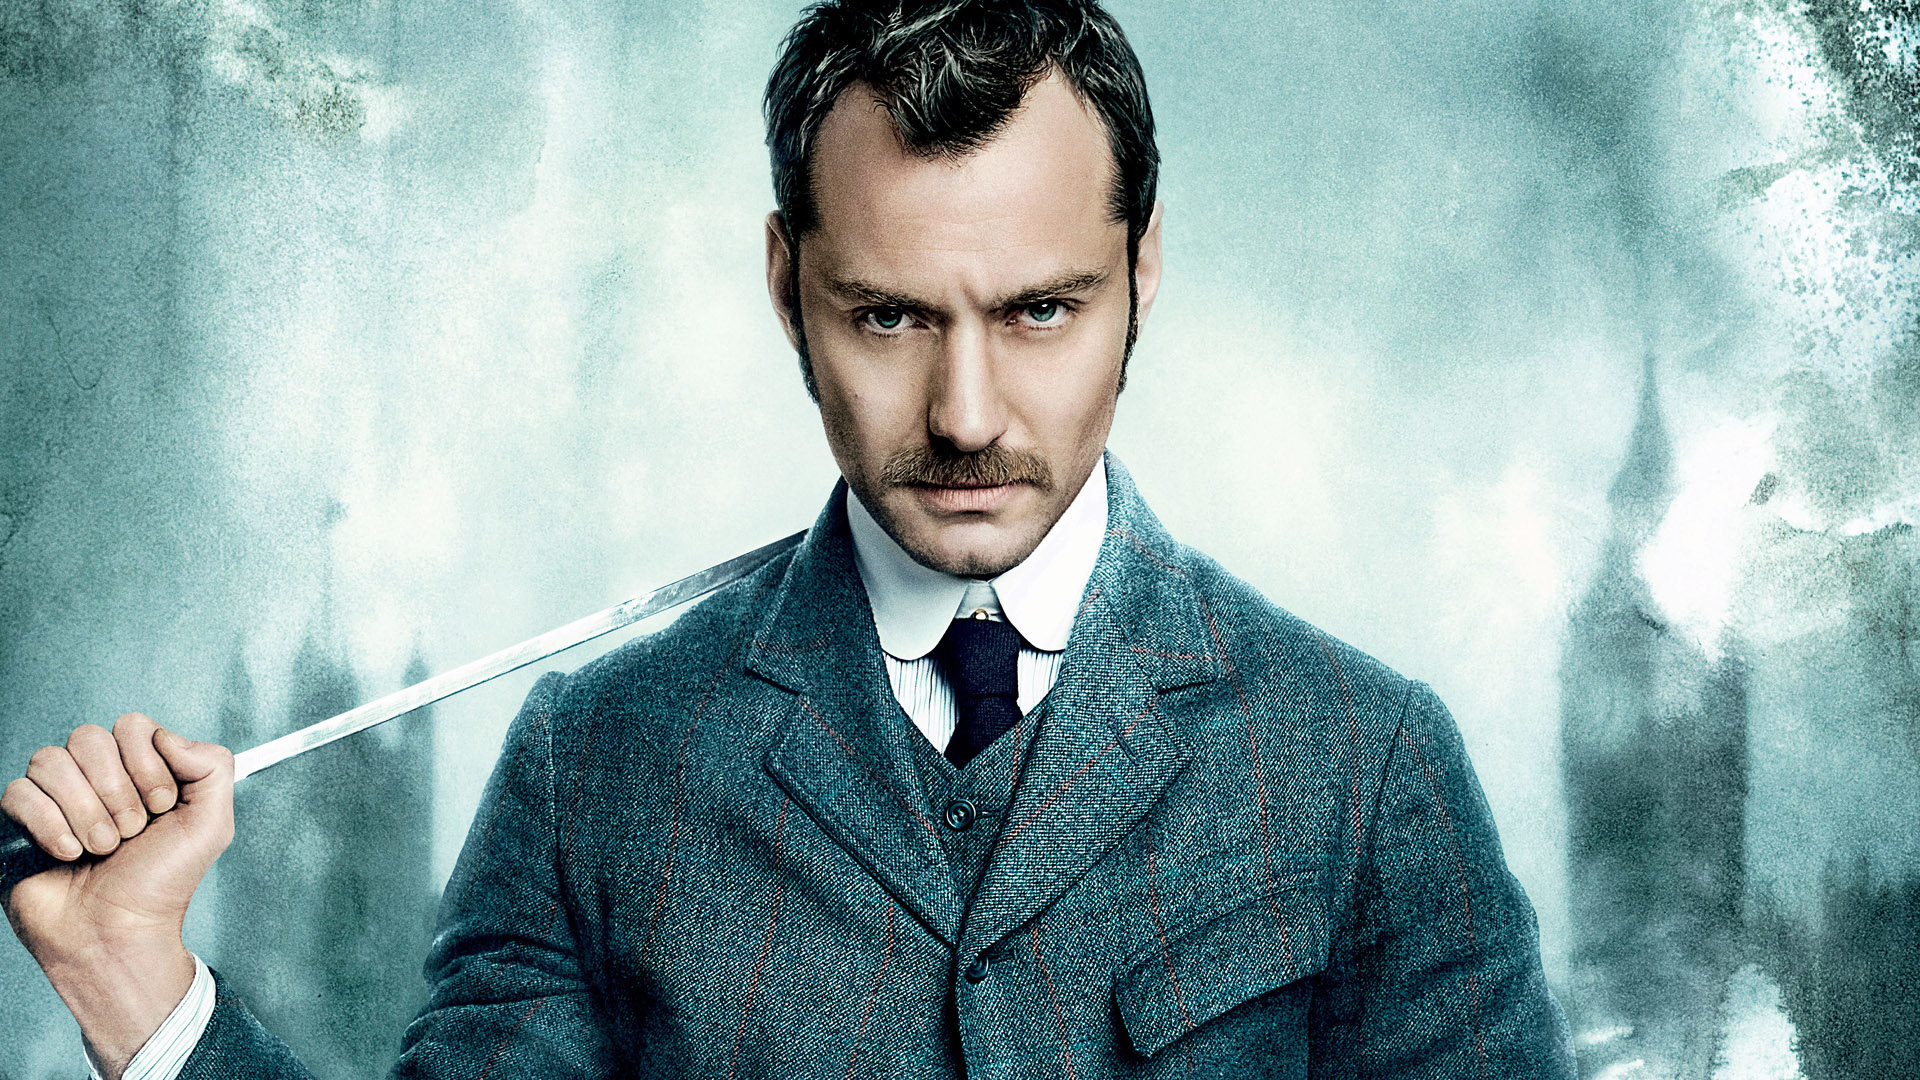 Download full hd Sherlock Holmes movie desktop background ID:47030 for free